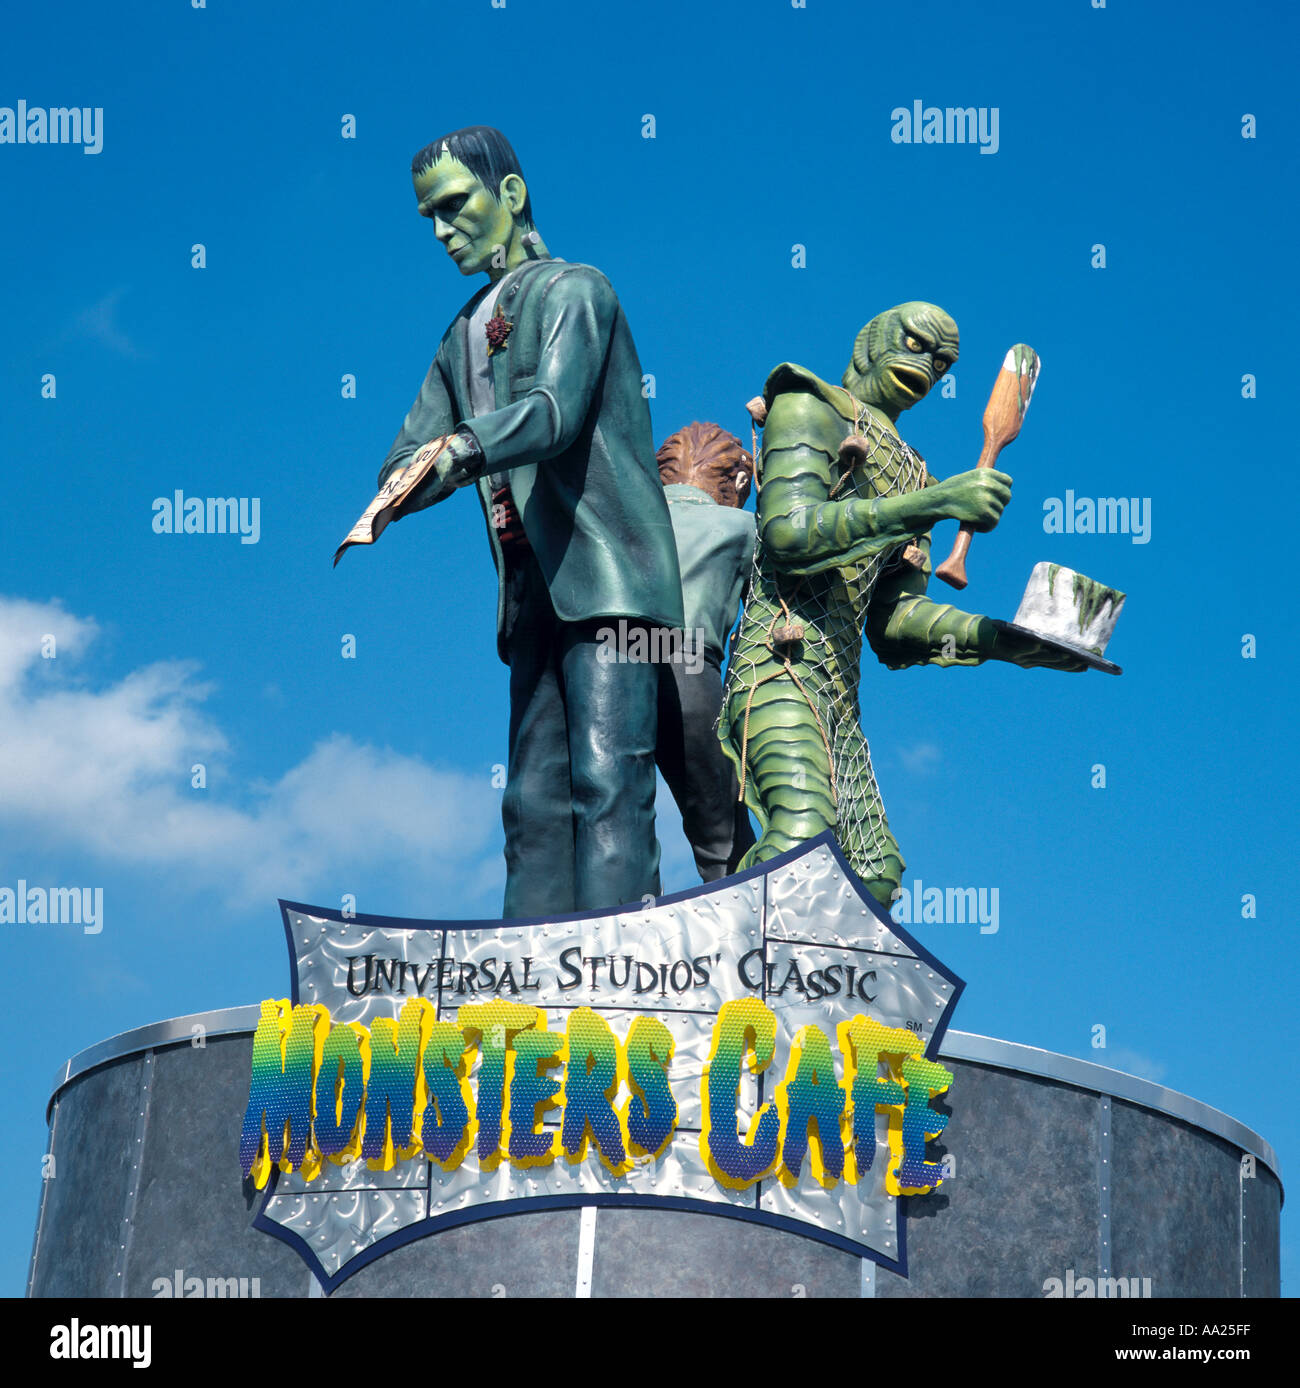 Monster-Cafe, Universal Studios in Orlando, Florida, USA Stockfoto